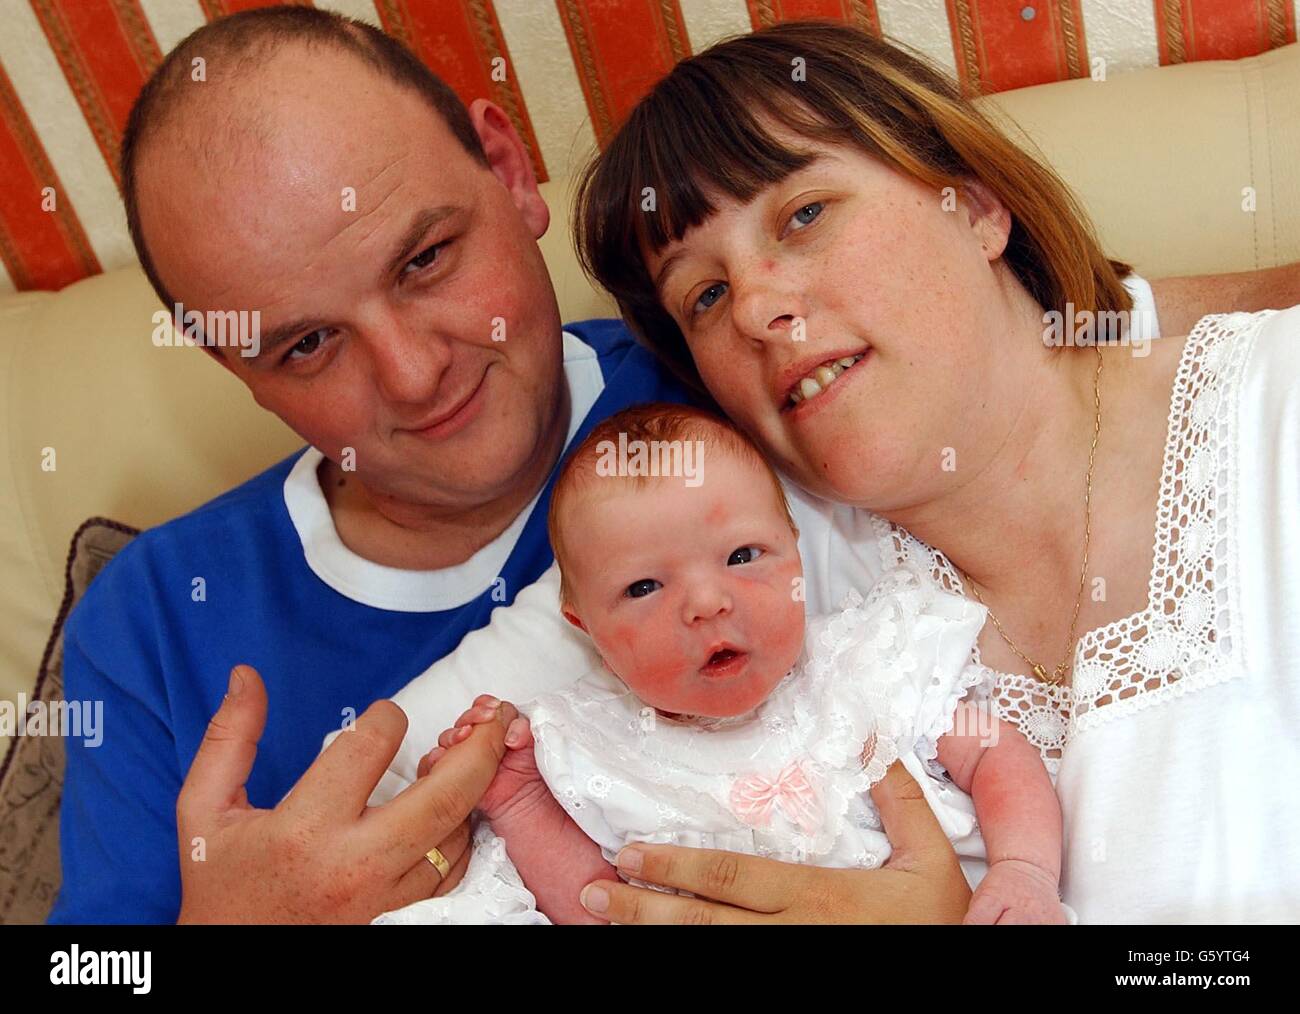 Emma Peake with baby Stock Photo